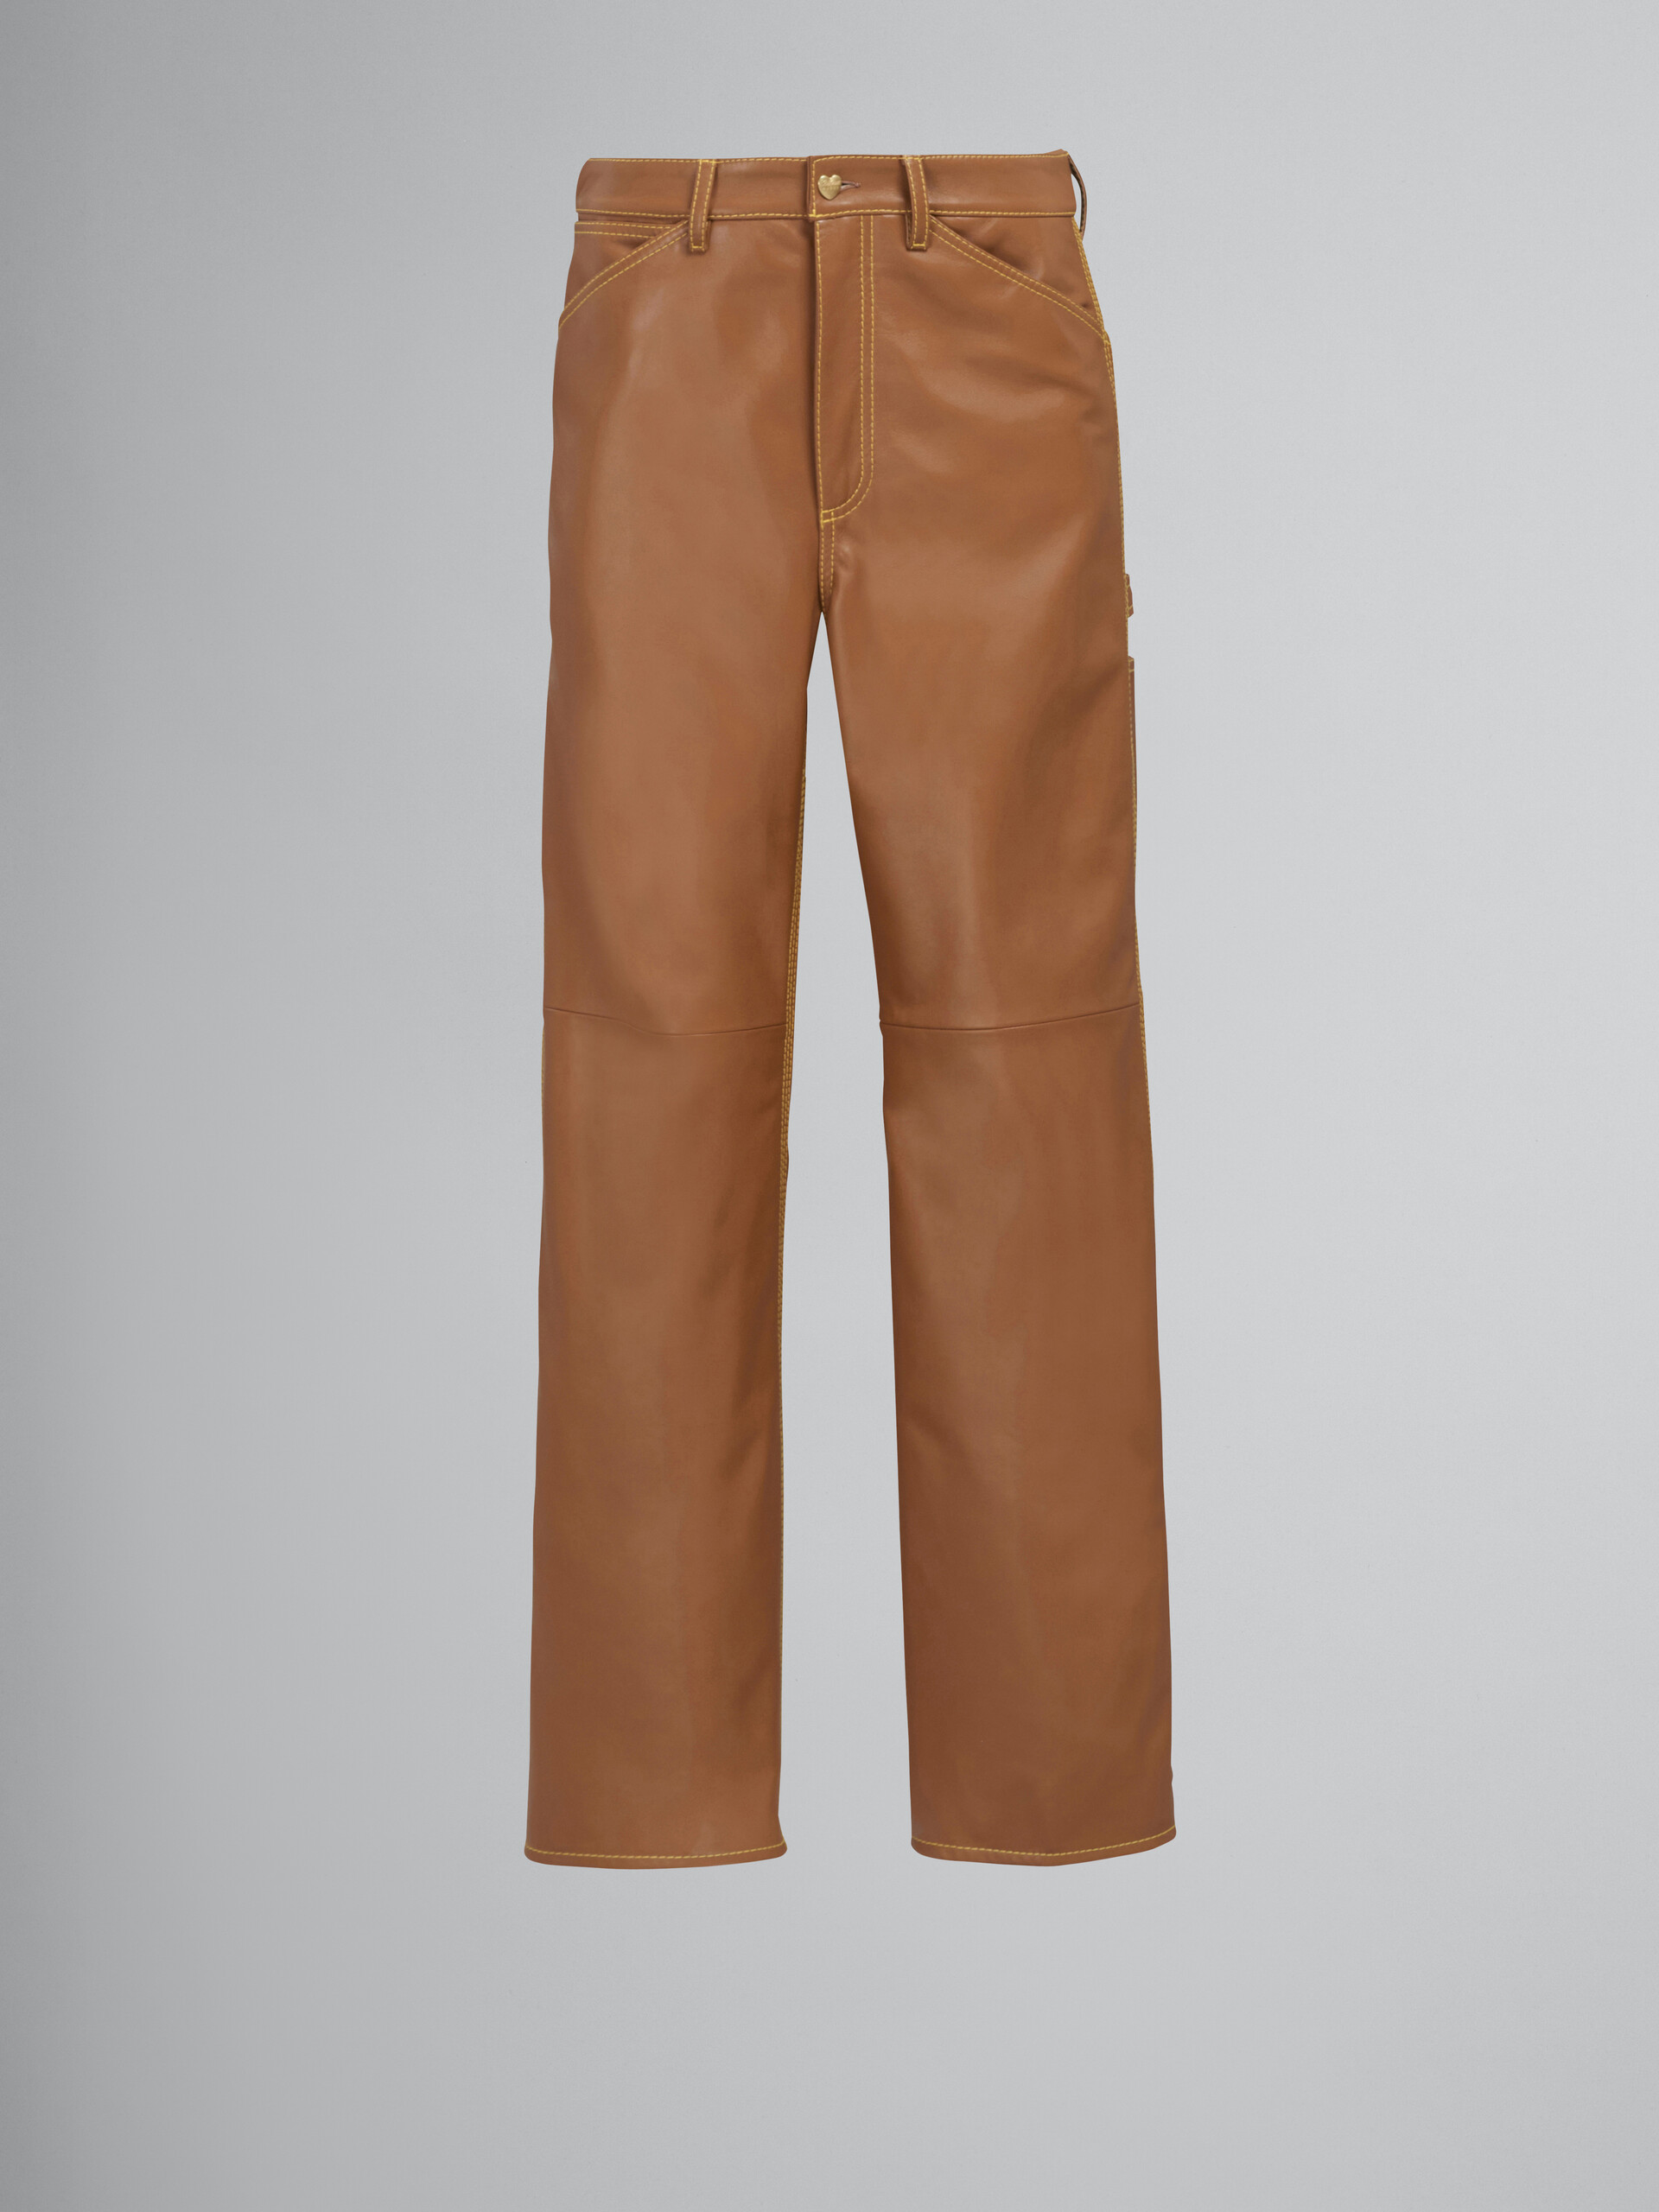 MARNI x CARHARTT WIP - brown leather trousers - Pants - Image 1